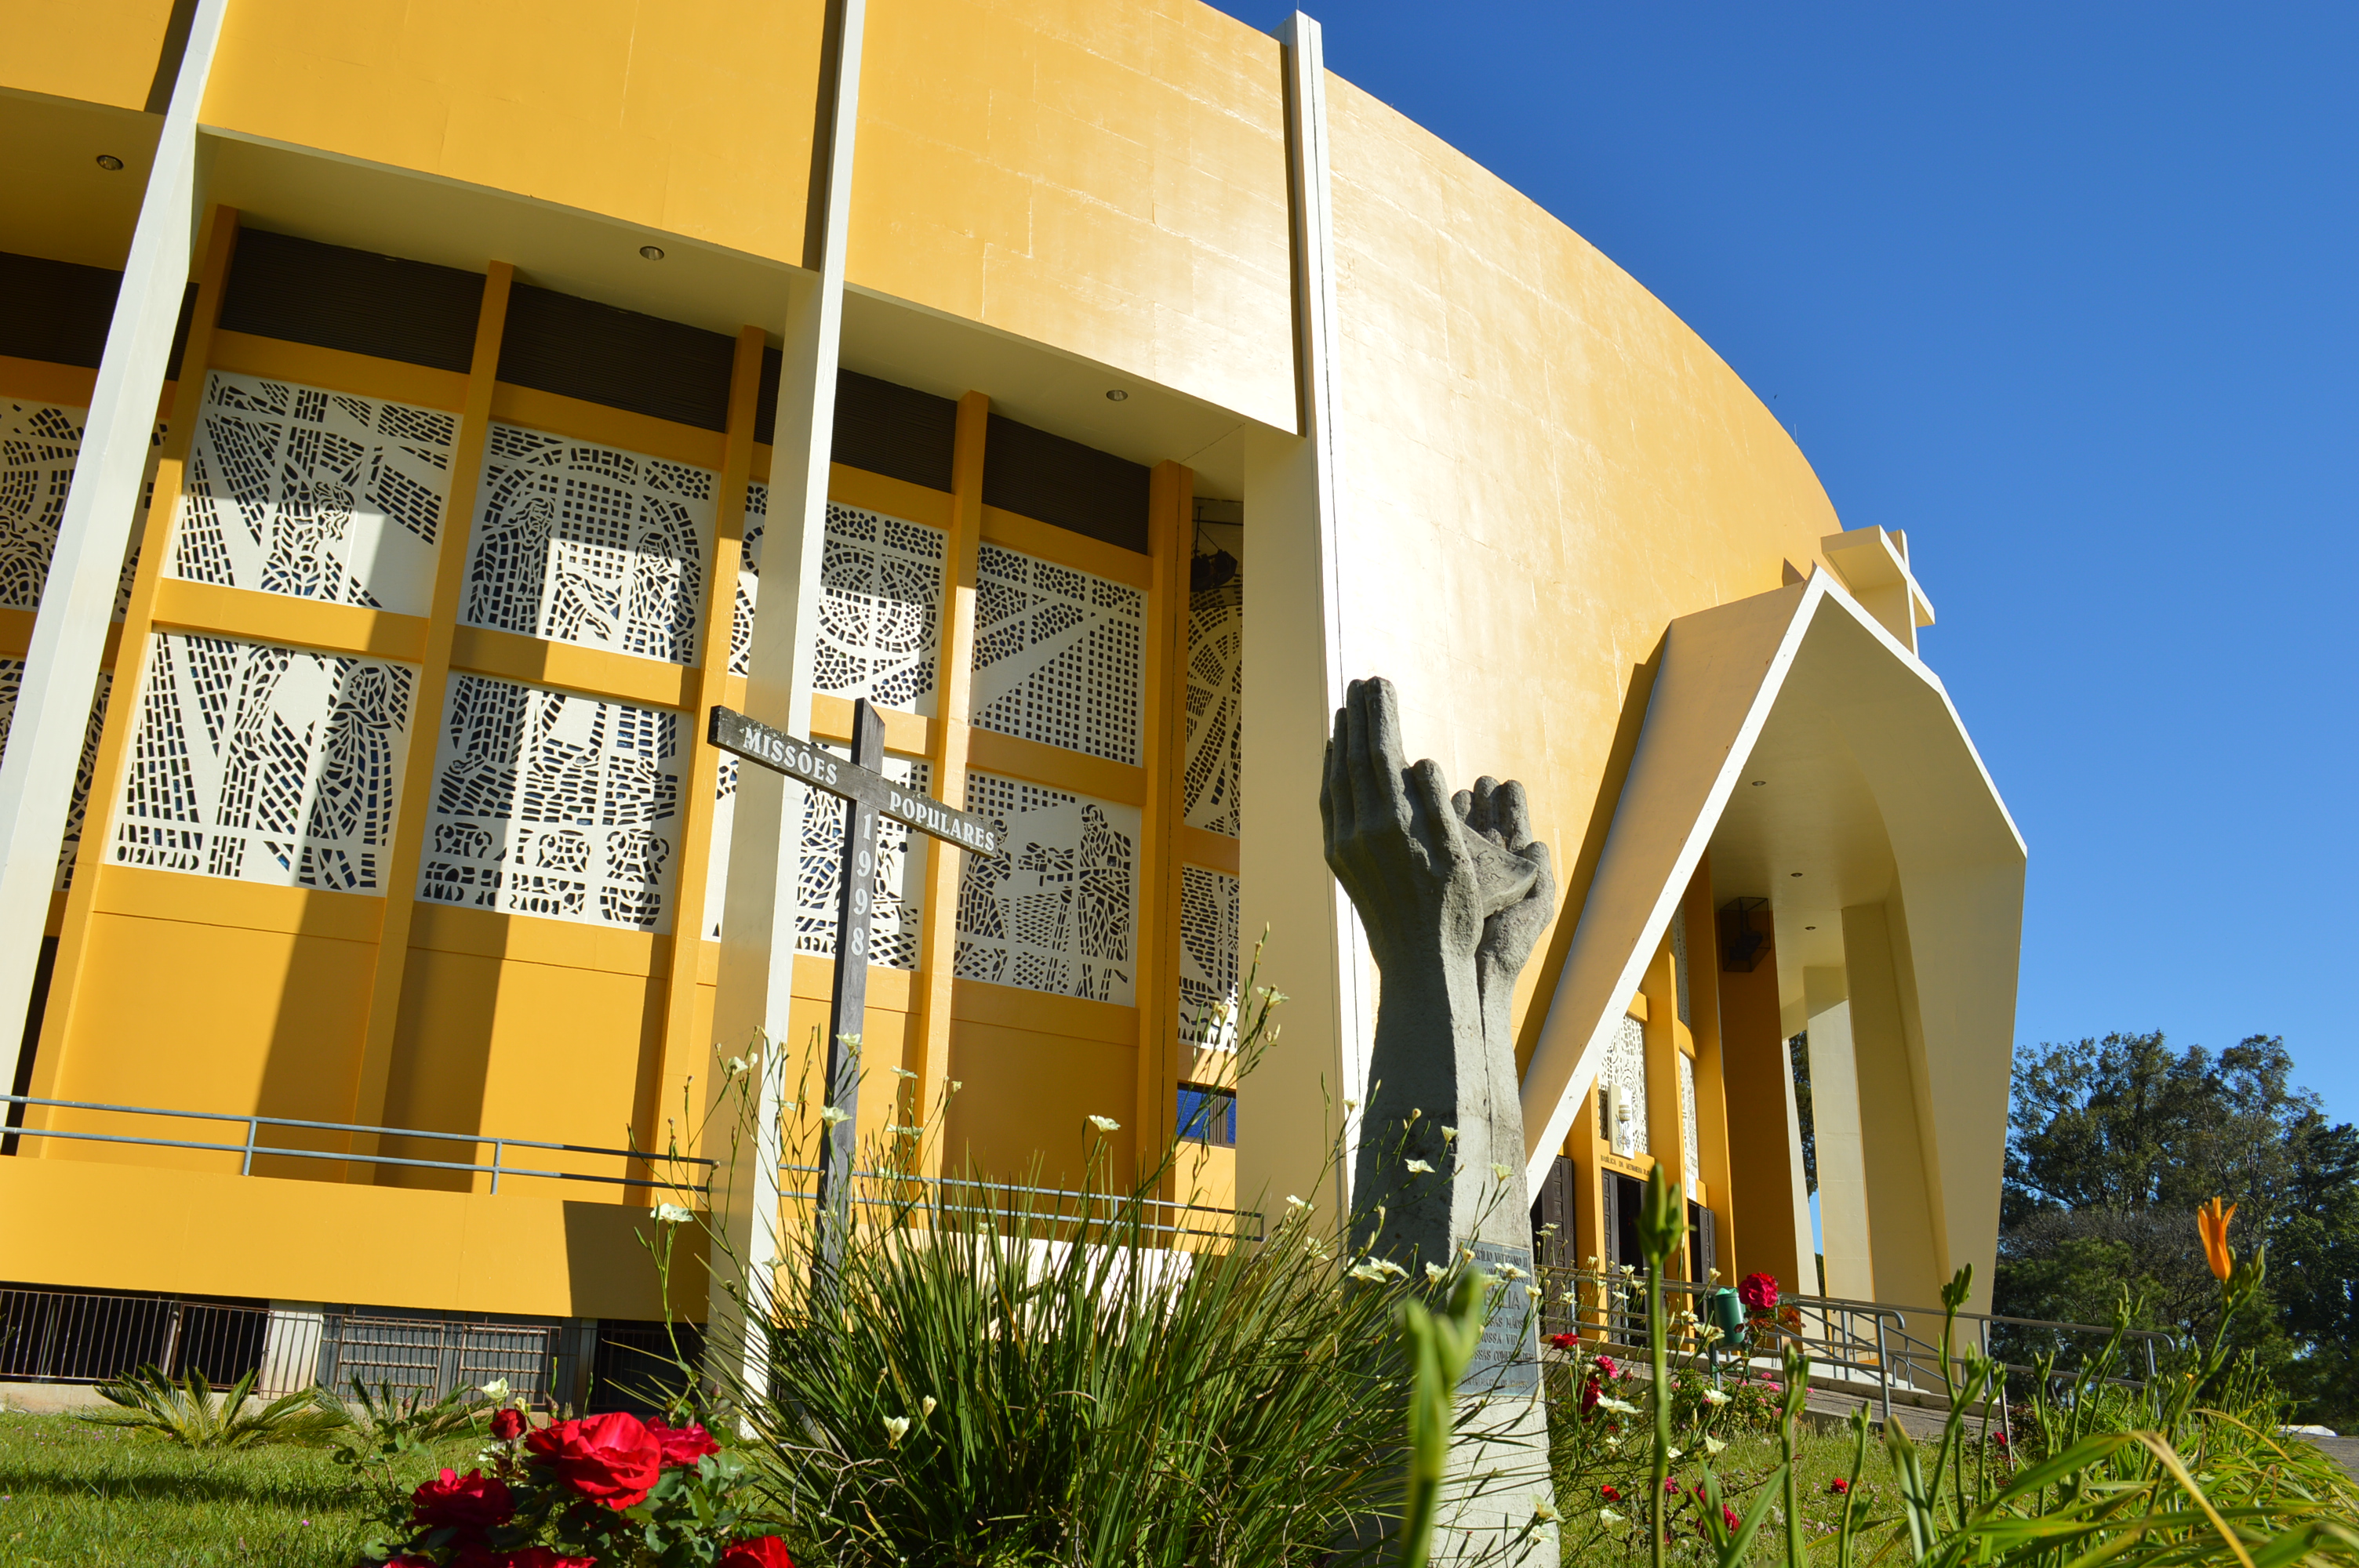 Sinagoga de Santa Maria - Rio Grande do Sul - Brasil